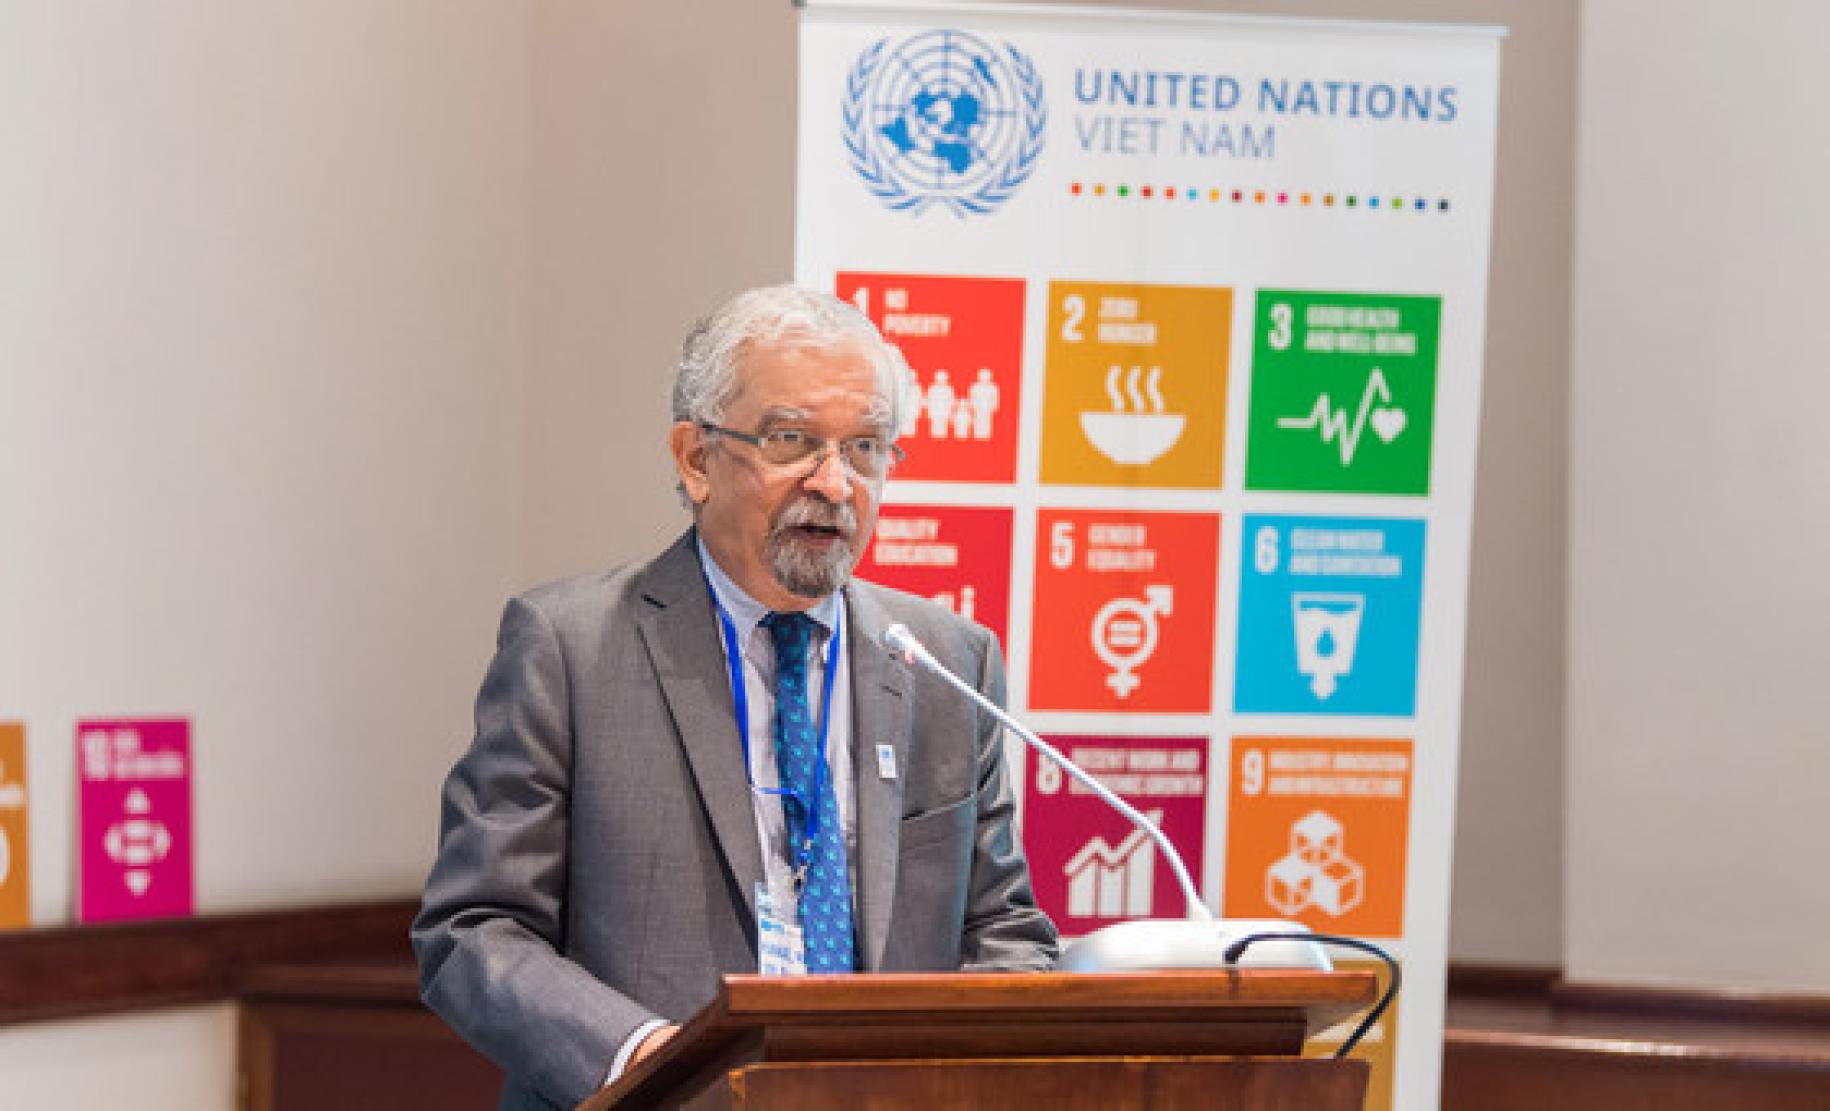 Kamal Malhotra the UN Resident Coordinator in Viet Nam is shown speaking at a podium.